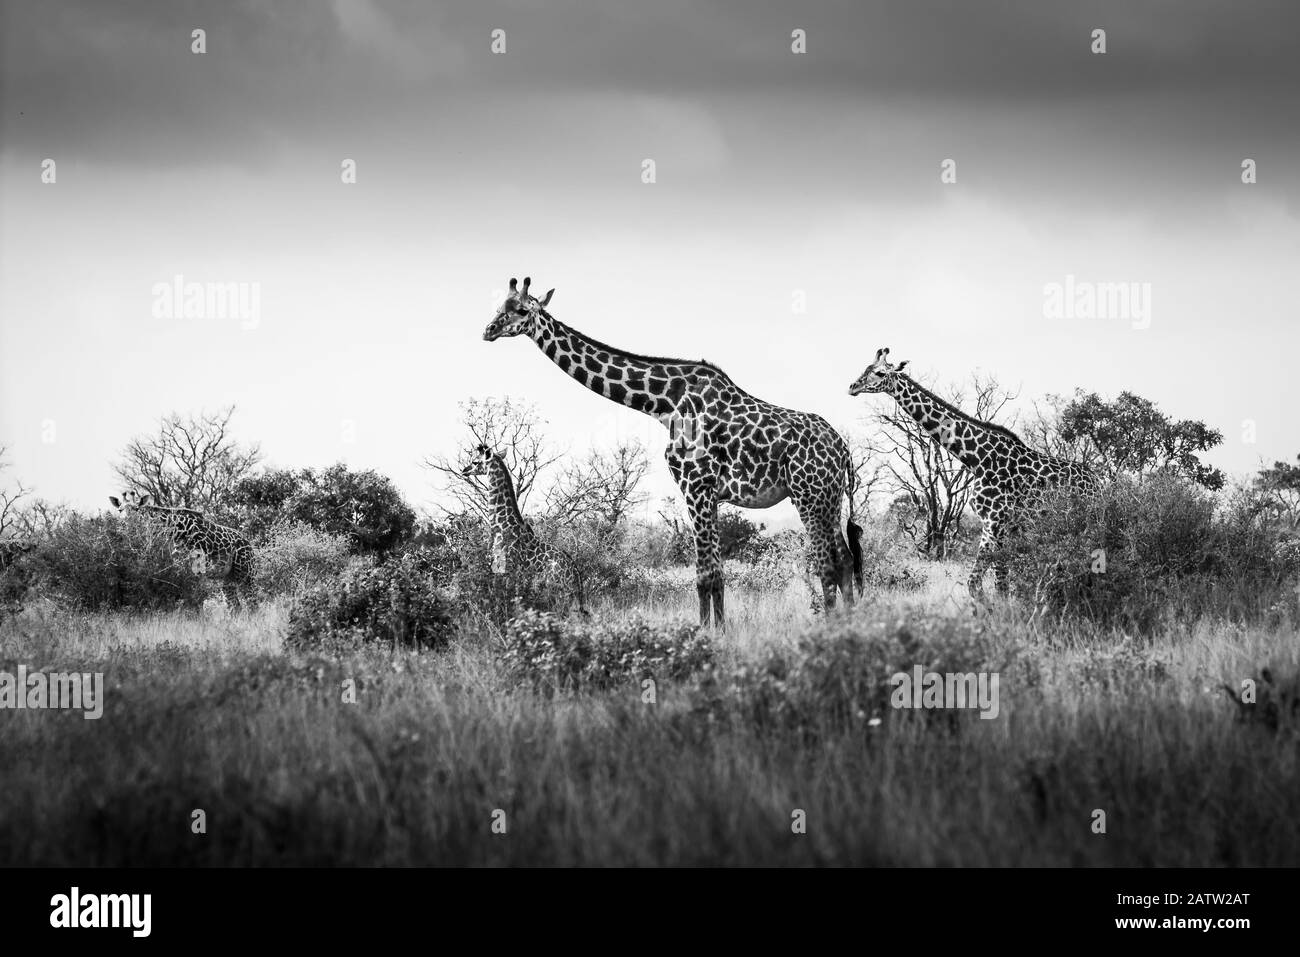 Giraffen in der Savanne, Safari in Kenia, Afrika, Familienbaby in Uganda, Tansania Botswana Jagd auf Elefanten Nationalpark Saanna Safari in Stockfoto